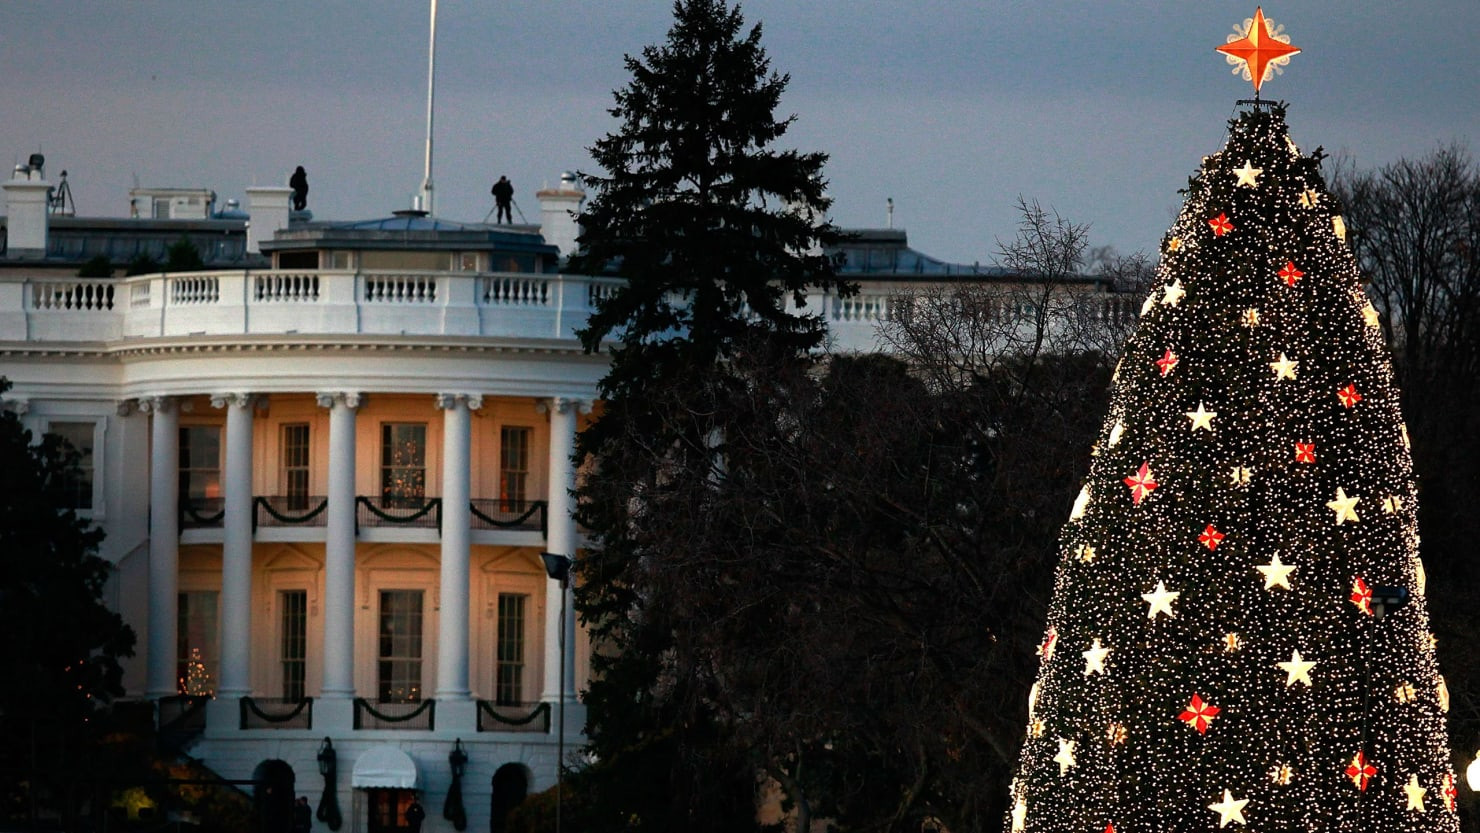 White House Christmas Tree Lighting
 2017 National Christmas Tree Lighting Ceremony How to